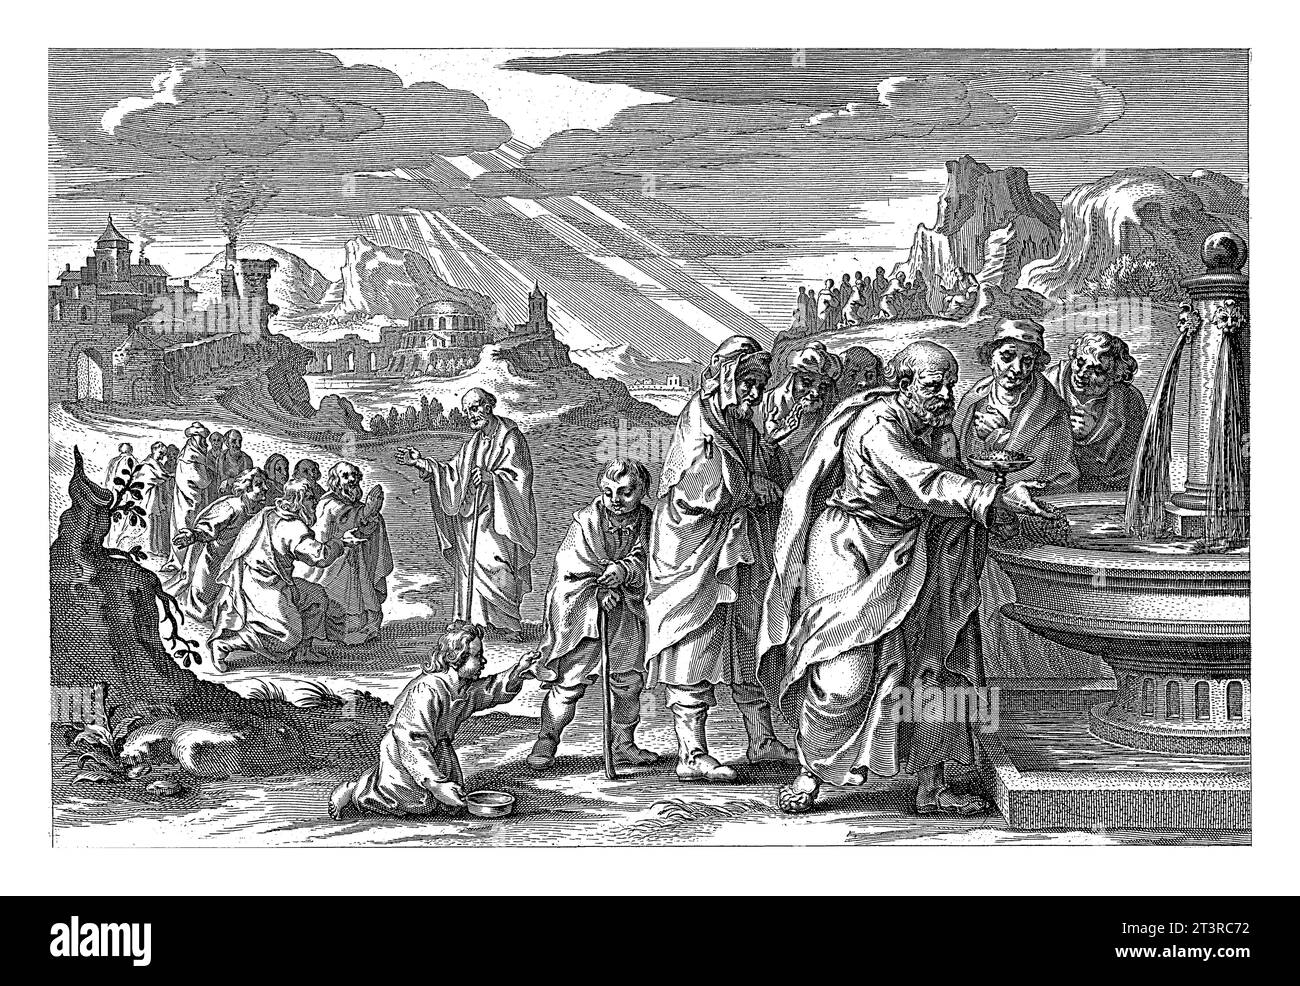 ELISA spruzza sale nel pozzo di Jericho, Nicolaes Ryckmans, dopo Pieter de Jode (i), 1616 - 1636 Elisa spruzza sale nel pozzo di Jericho a p Foto Stock